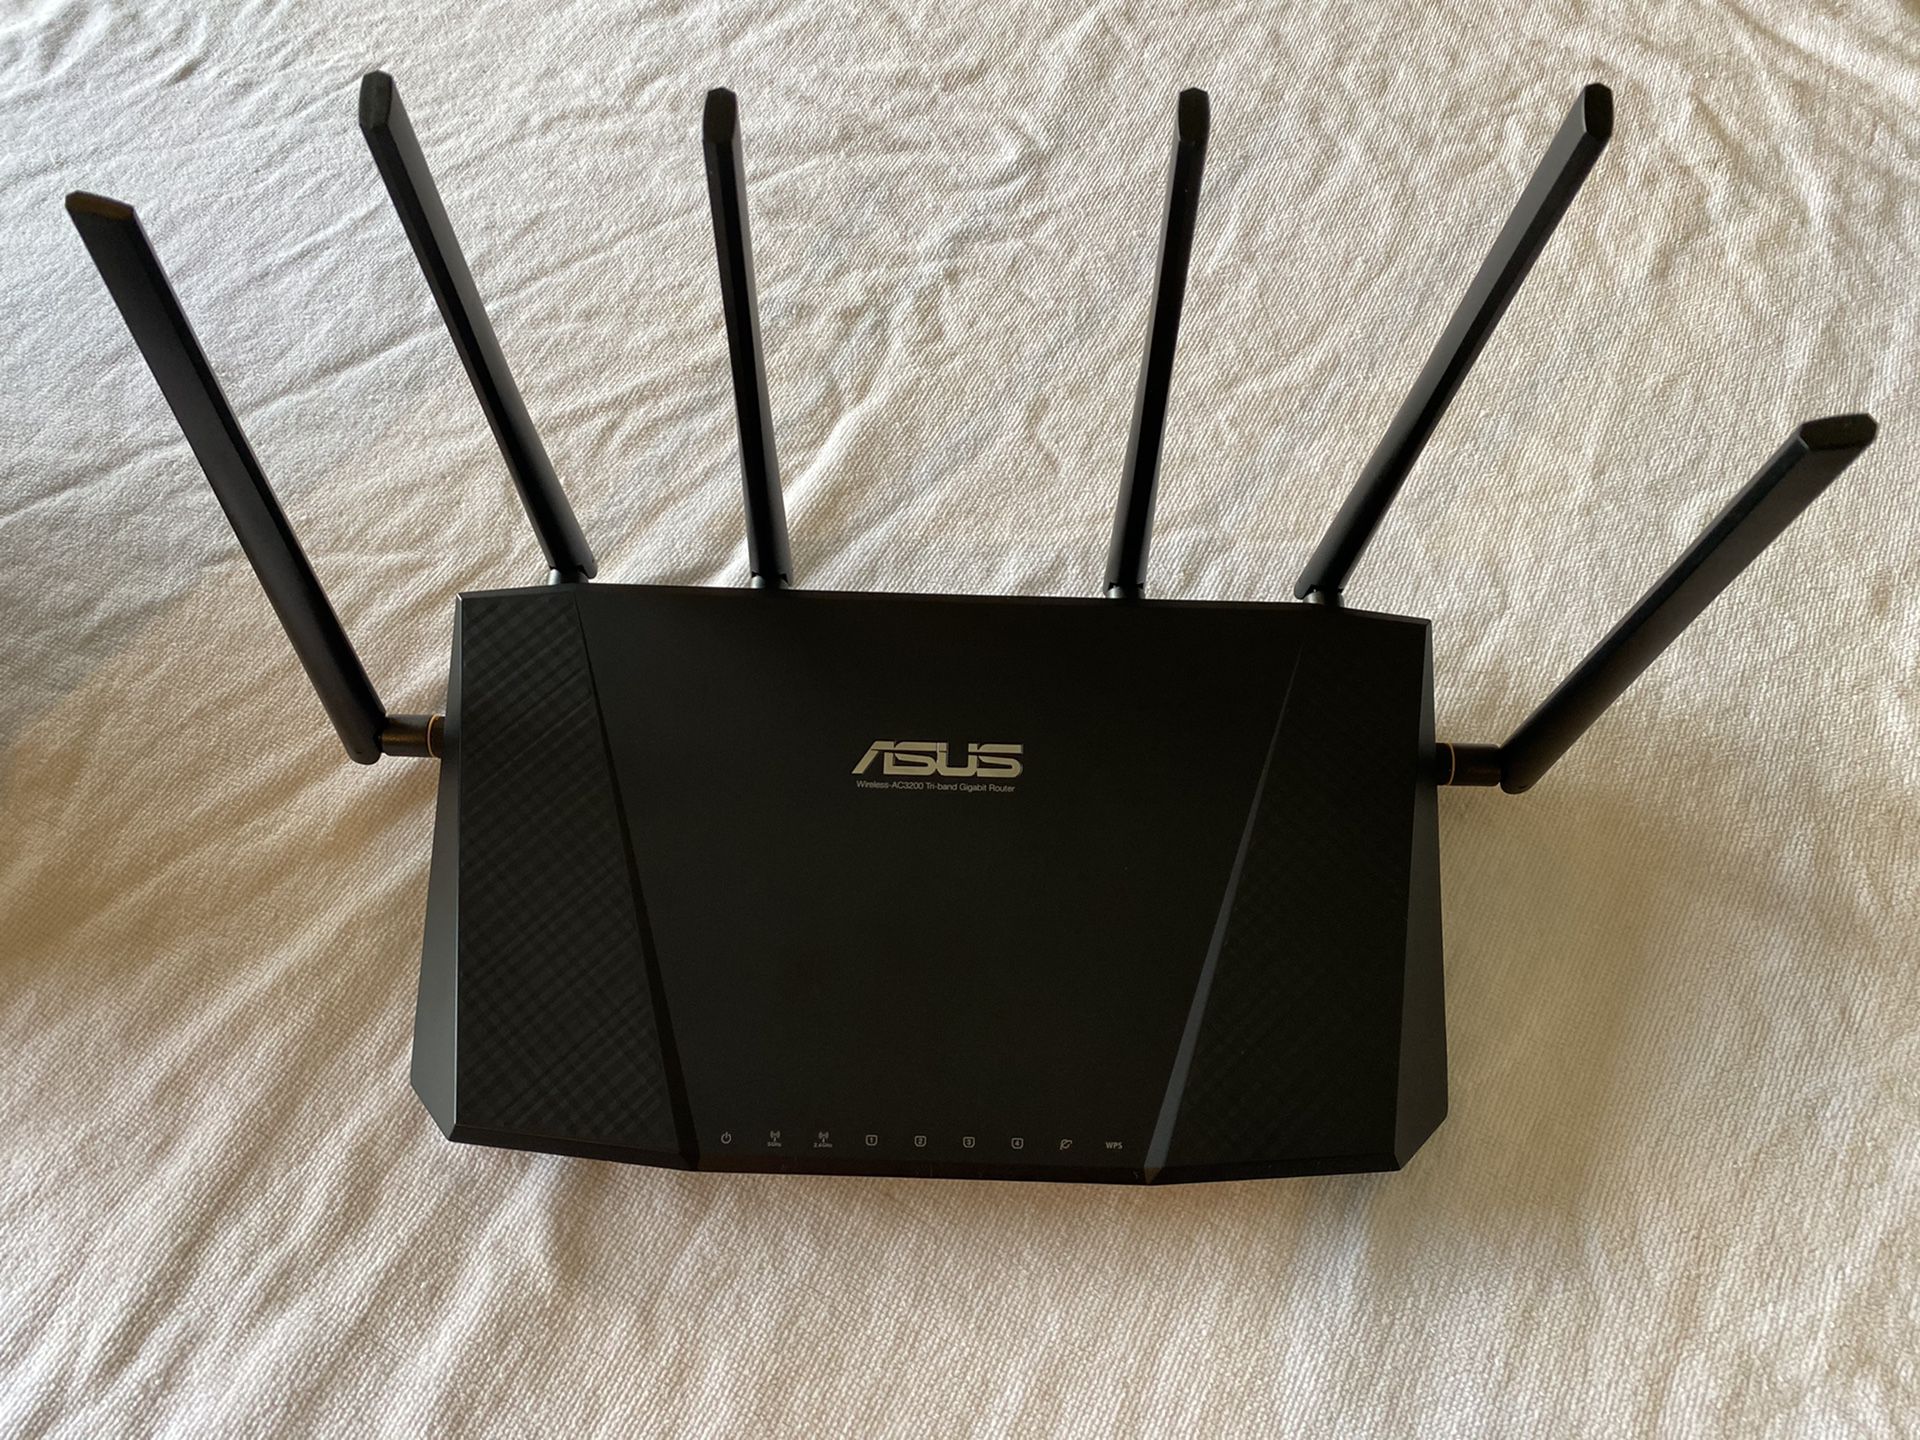 ASUS AC-3200 Tri-Band Gigabit WiFi Router